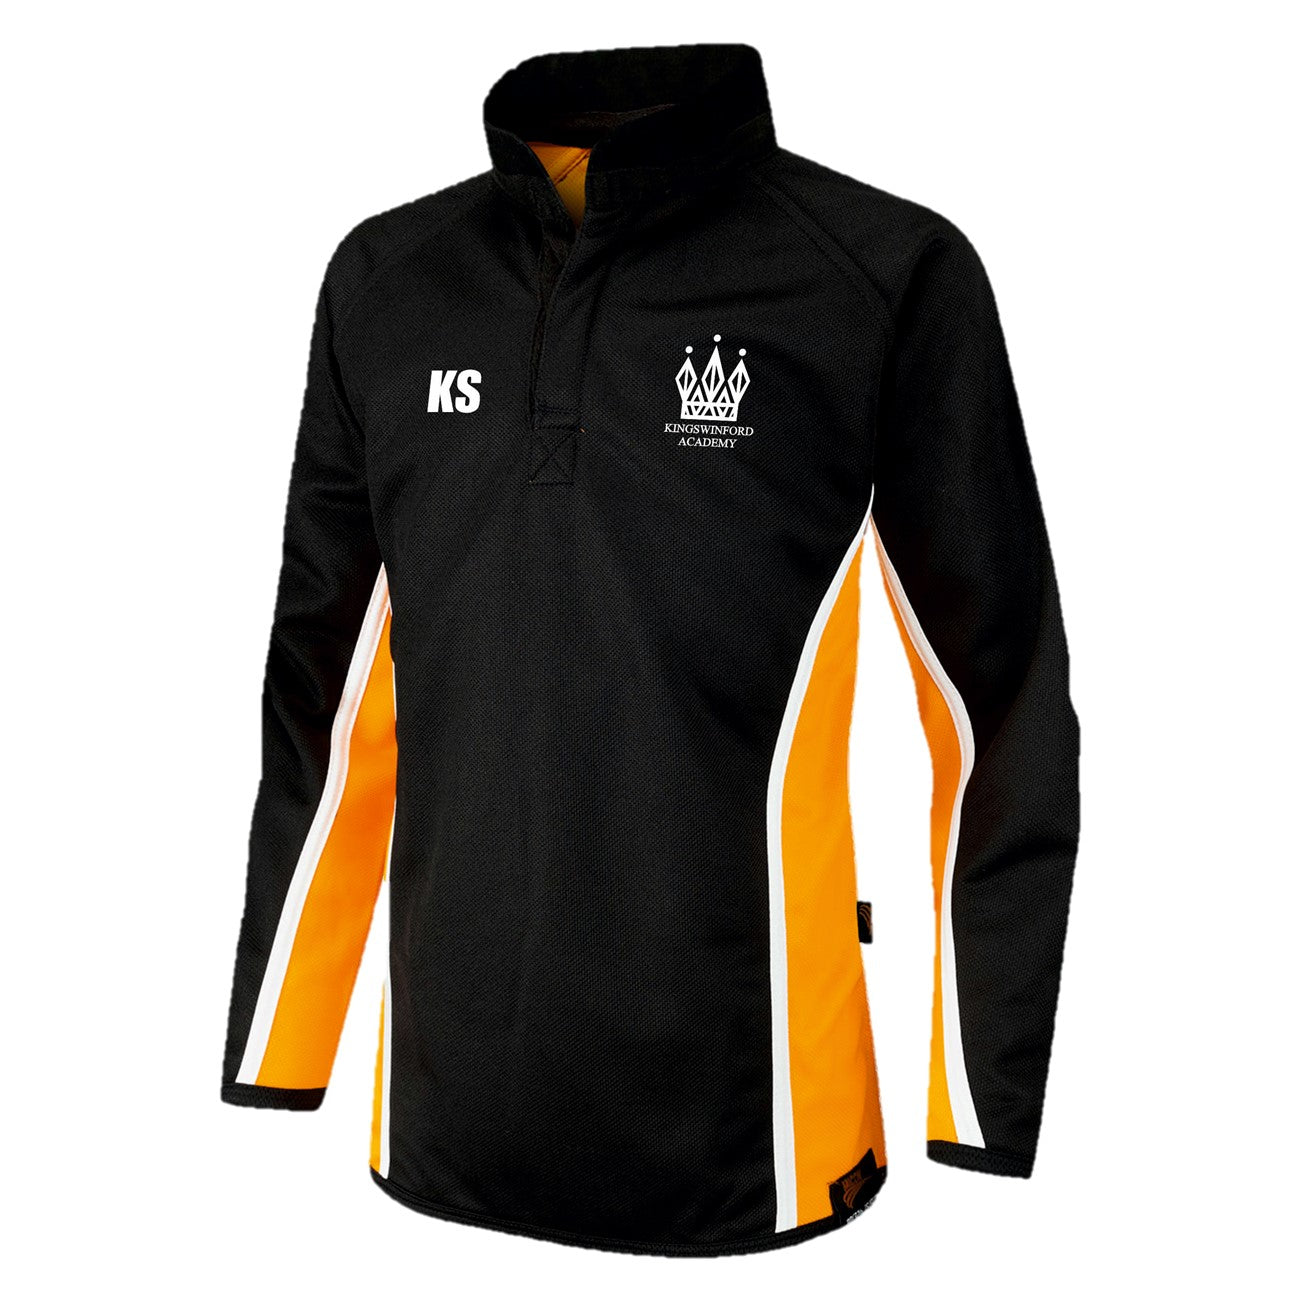 Kingswinford Academy P.E. Rugby Shirt [KWS]